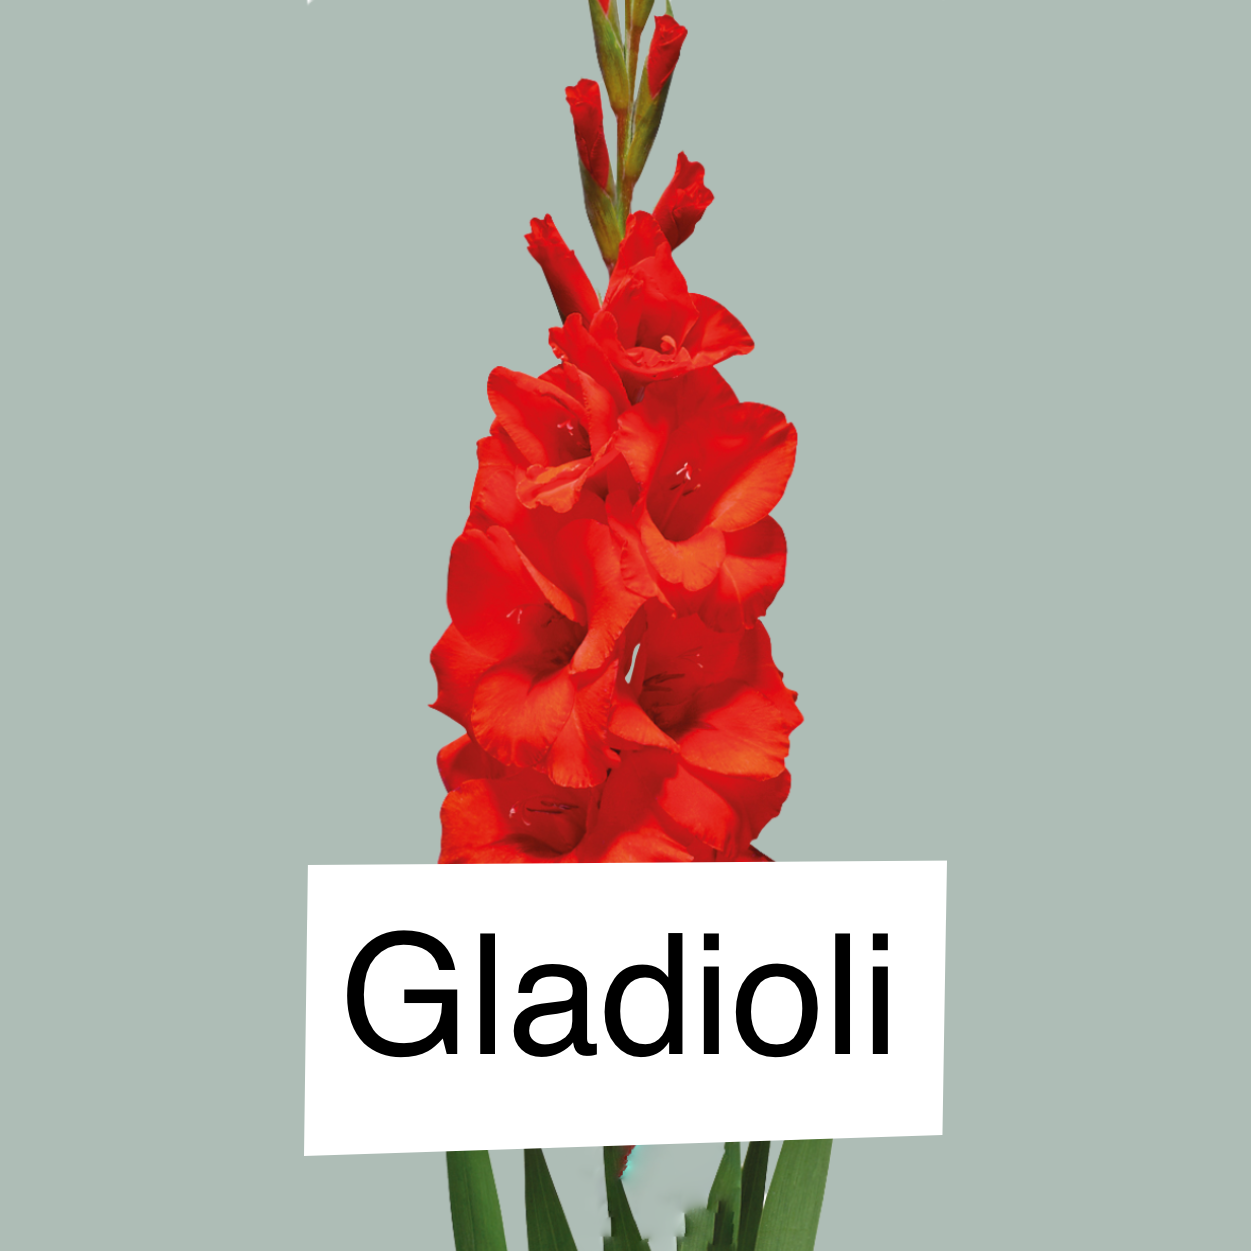 Gladioli